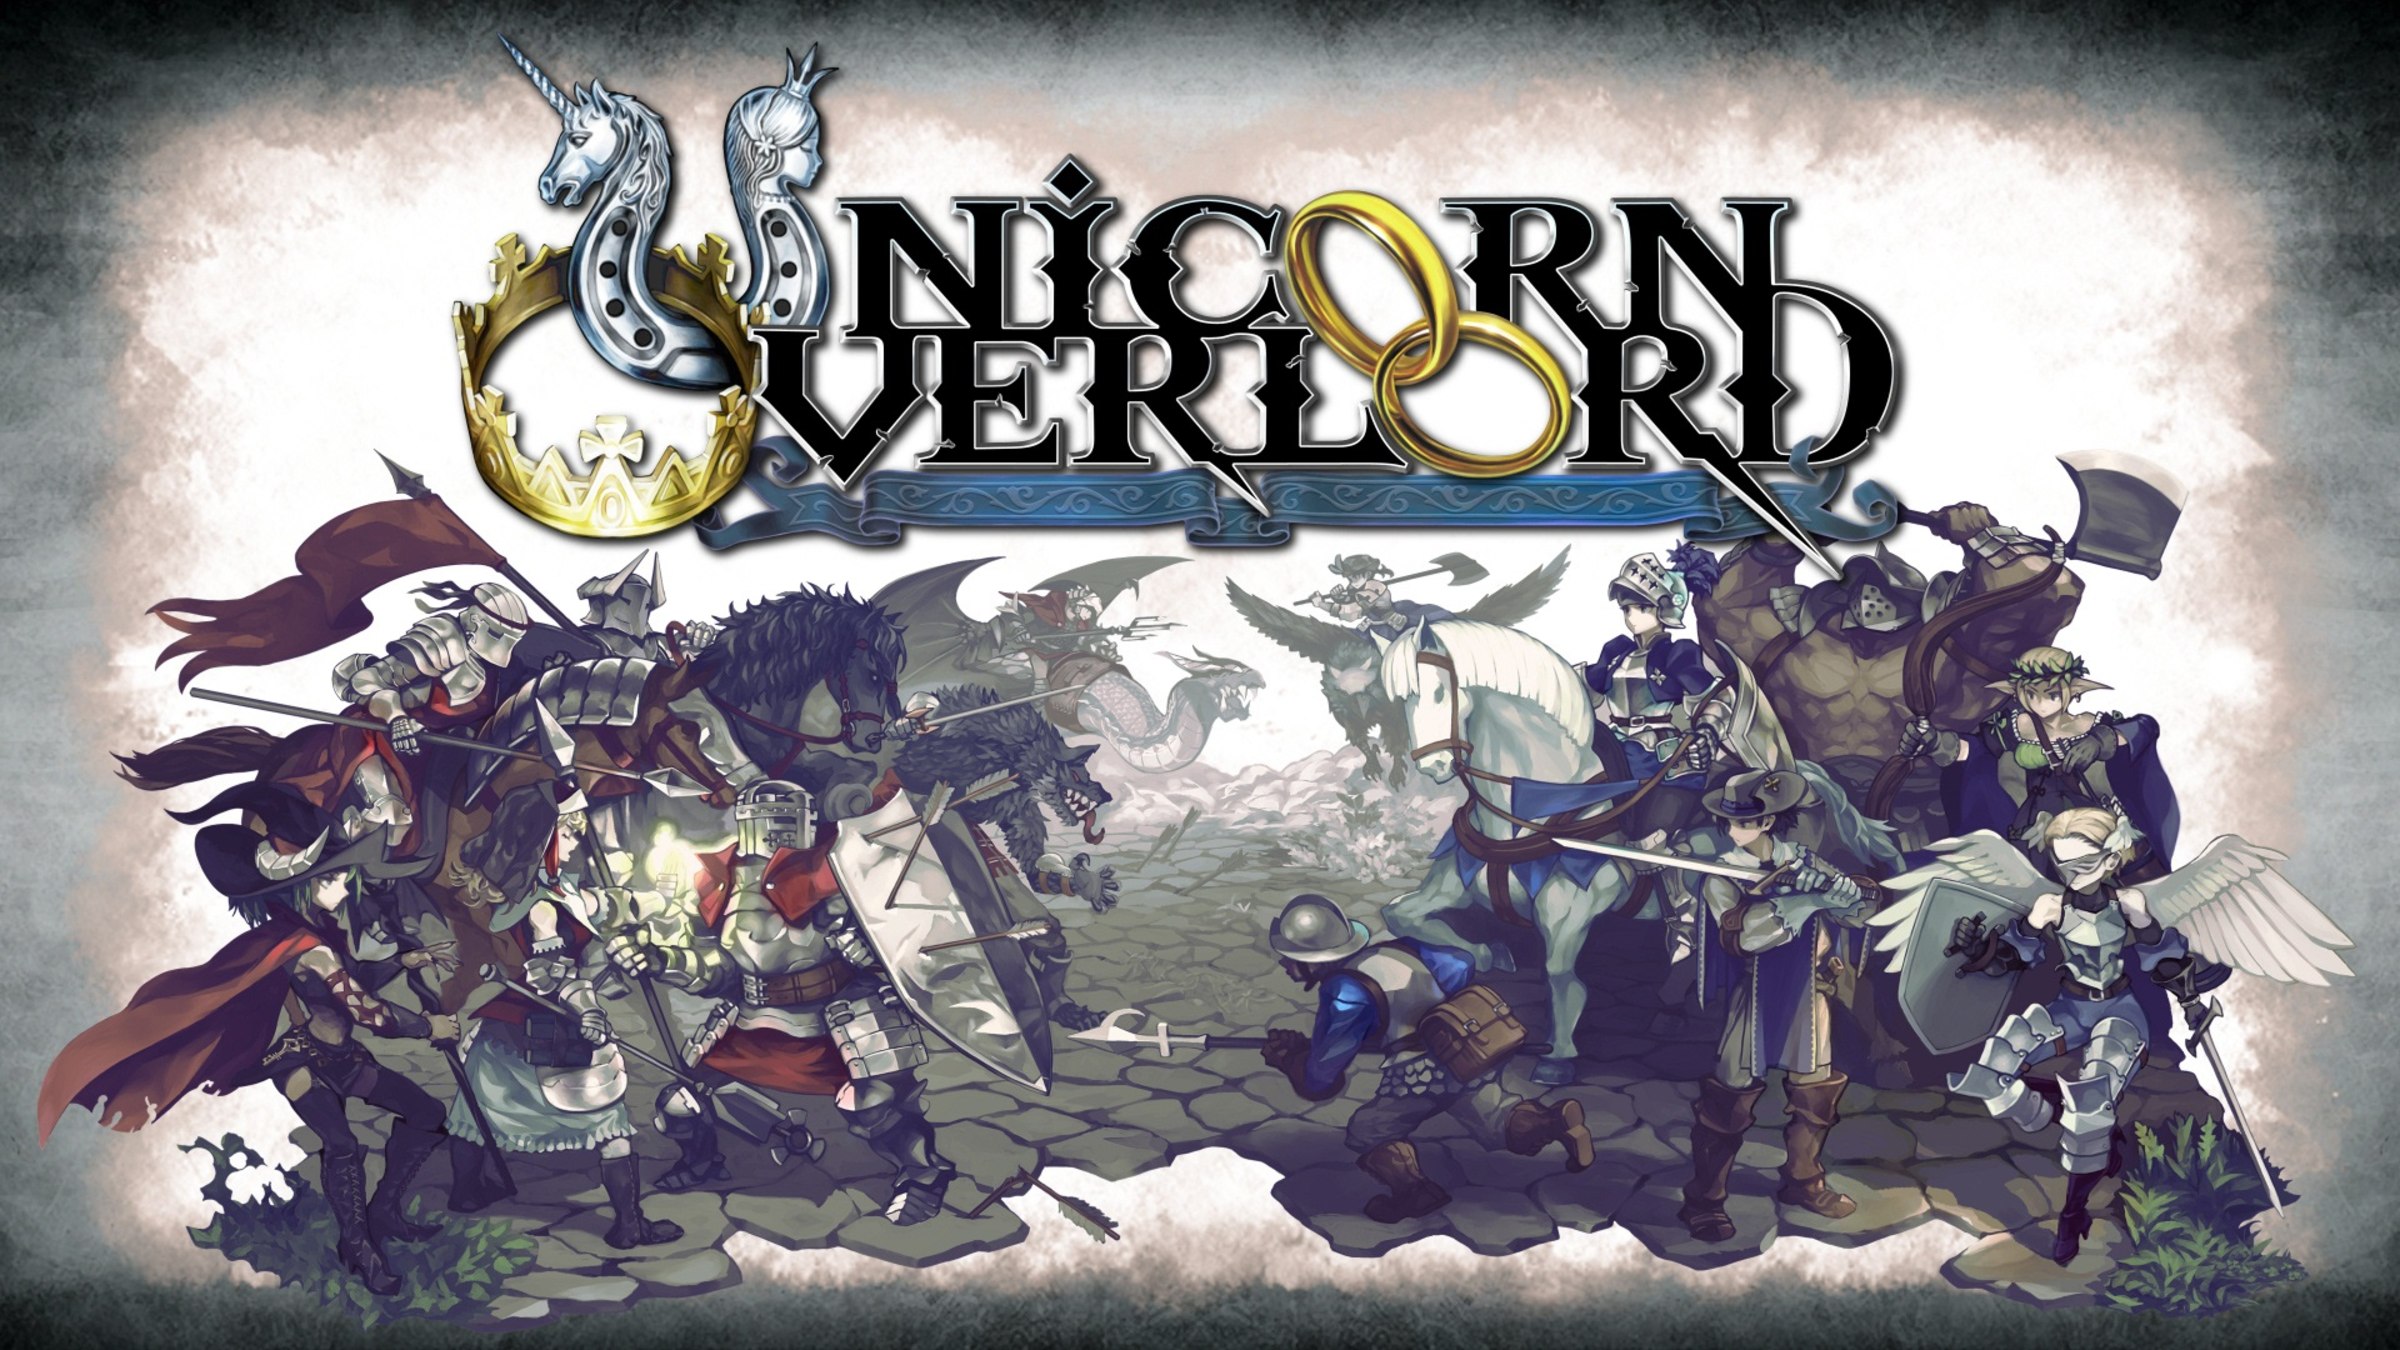 Steam Community :: Overlord - RPG Online Battle